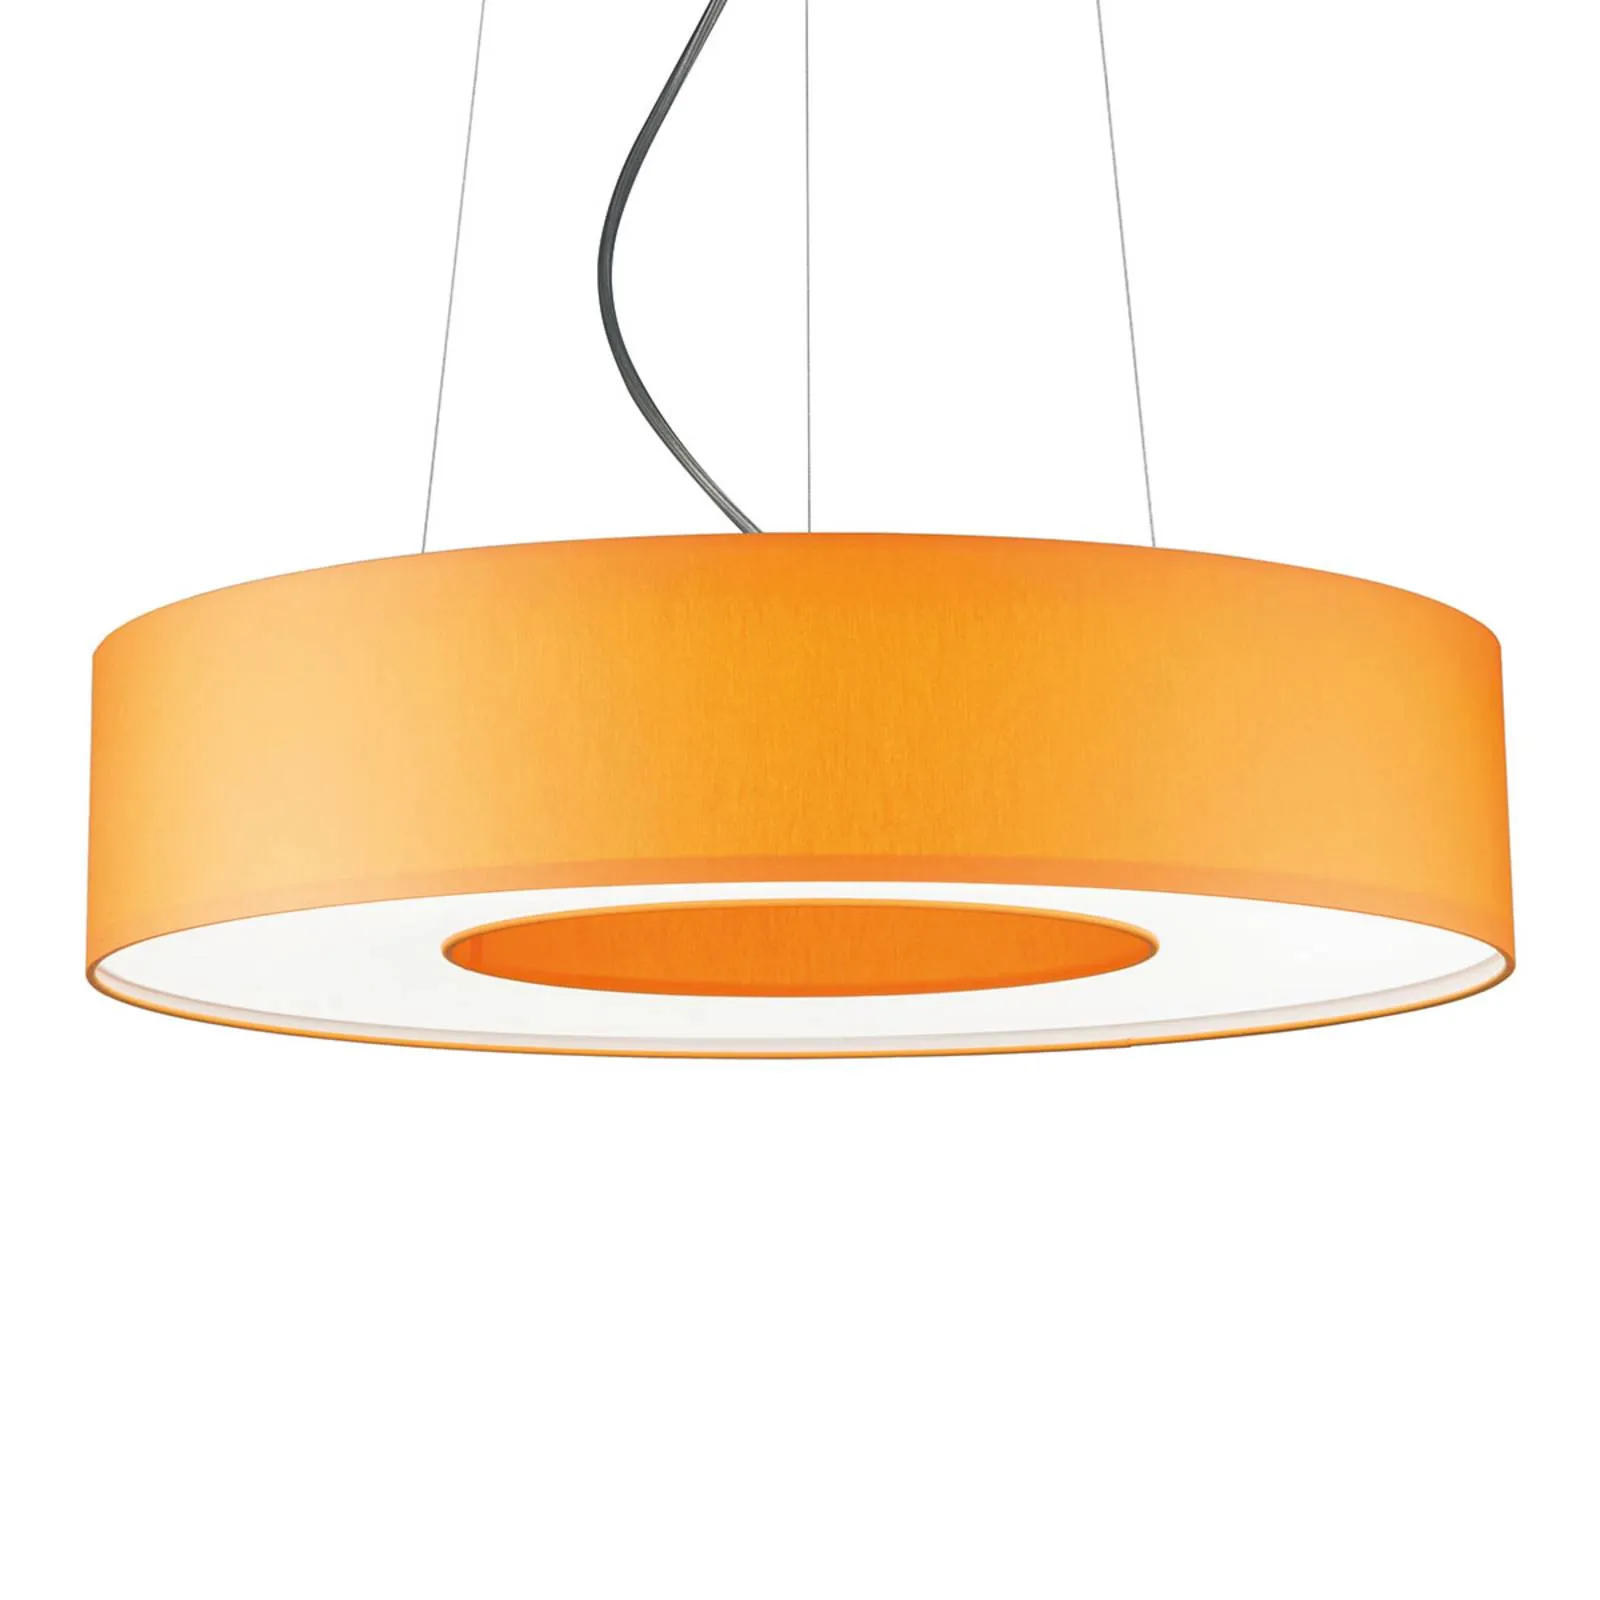  Lampada LED a sospensione Donut 22 W arancione